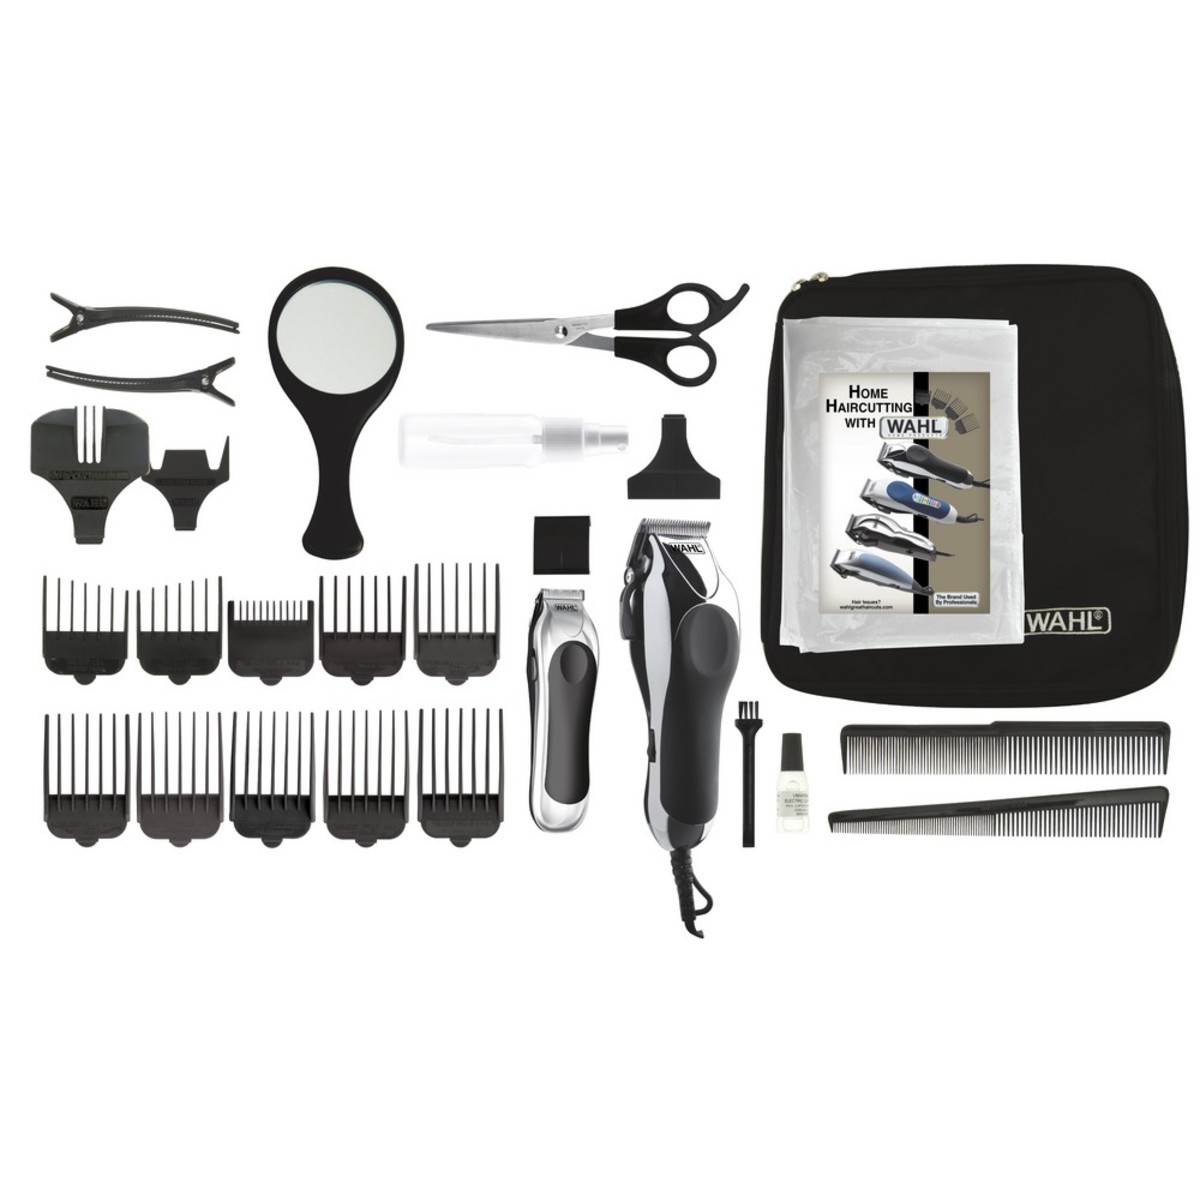 Wahl HairCutting Kit 79524-1001